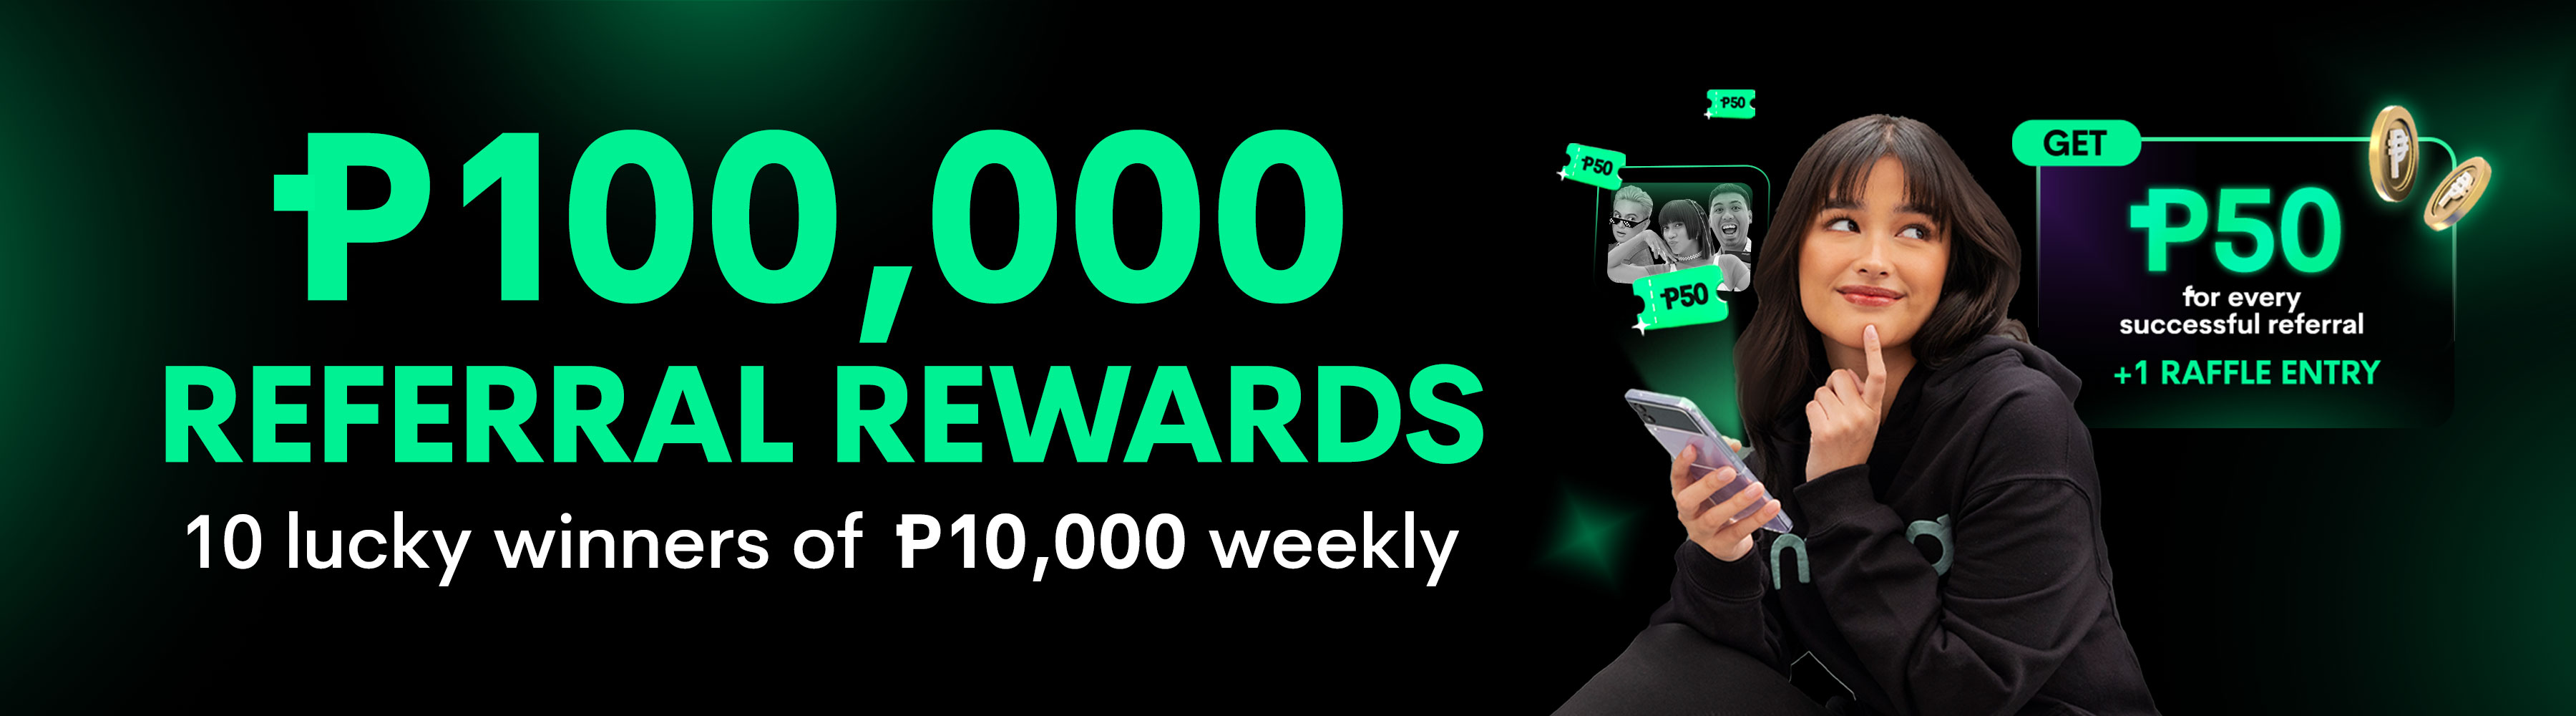 ₱100,000 referral rewards coming your way!